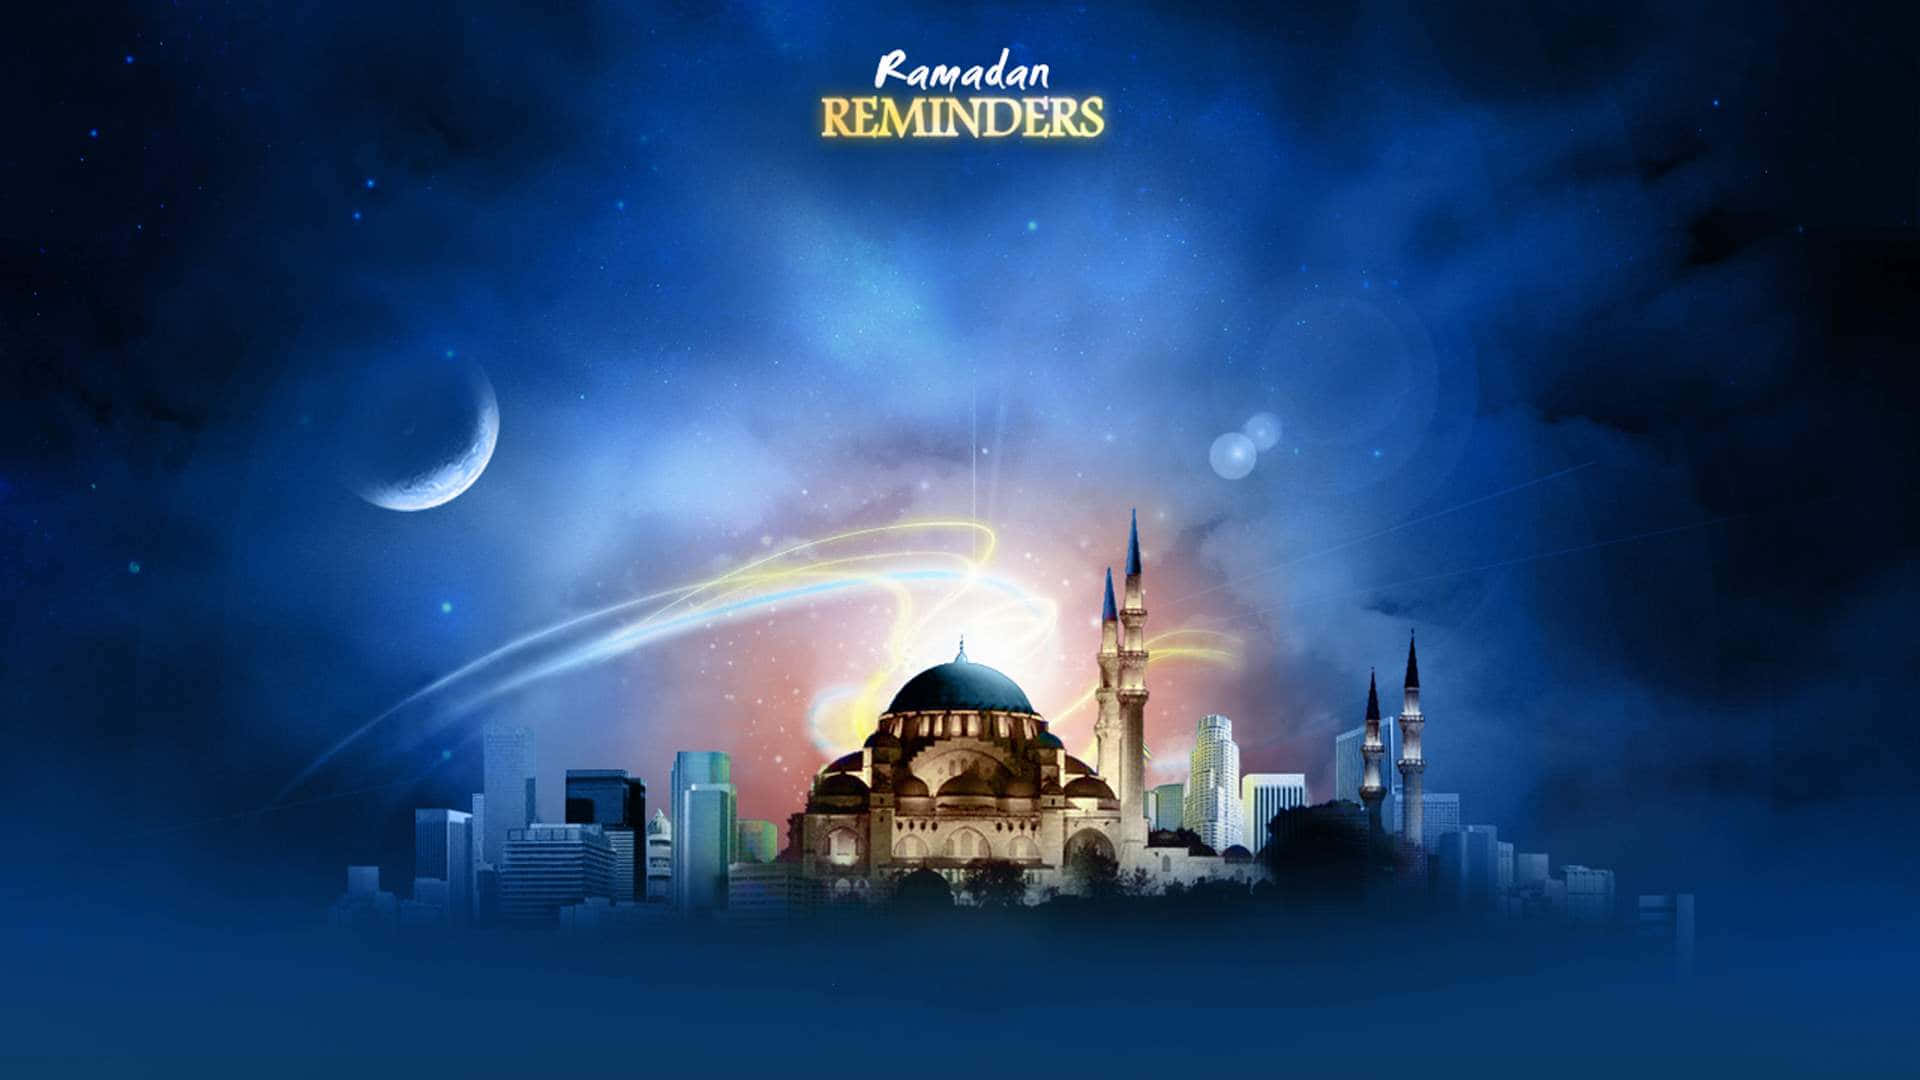 Ramadanmubarak Hintergrund